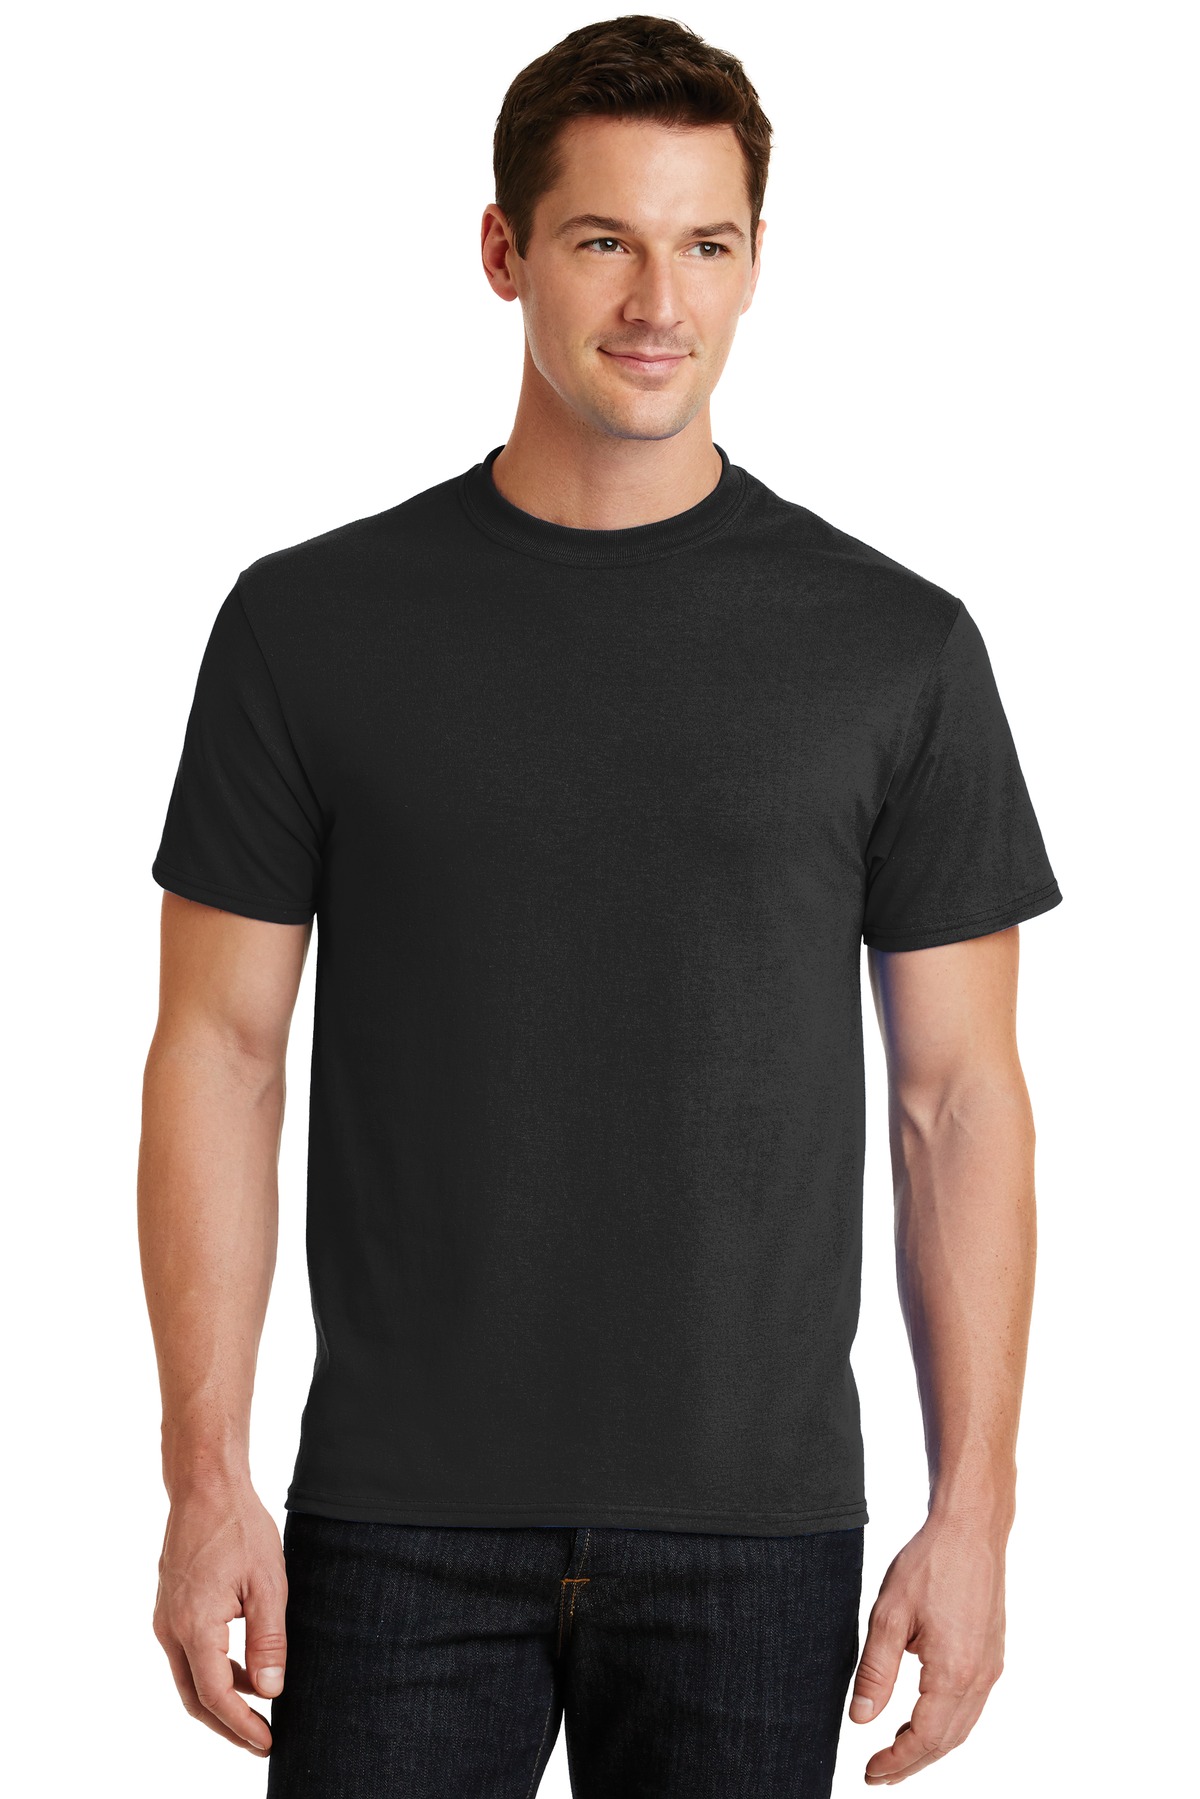 FOH – Men’s / Unisex Blank T-shirt: Core Blend Tee. PC55 – Black